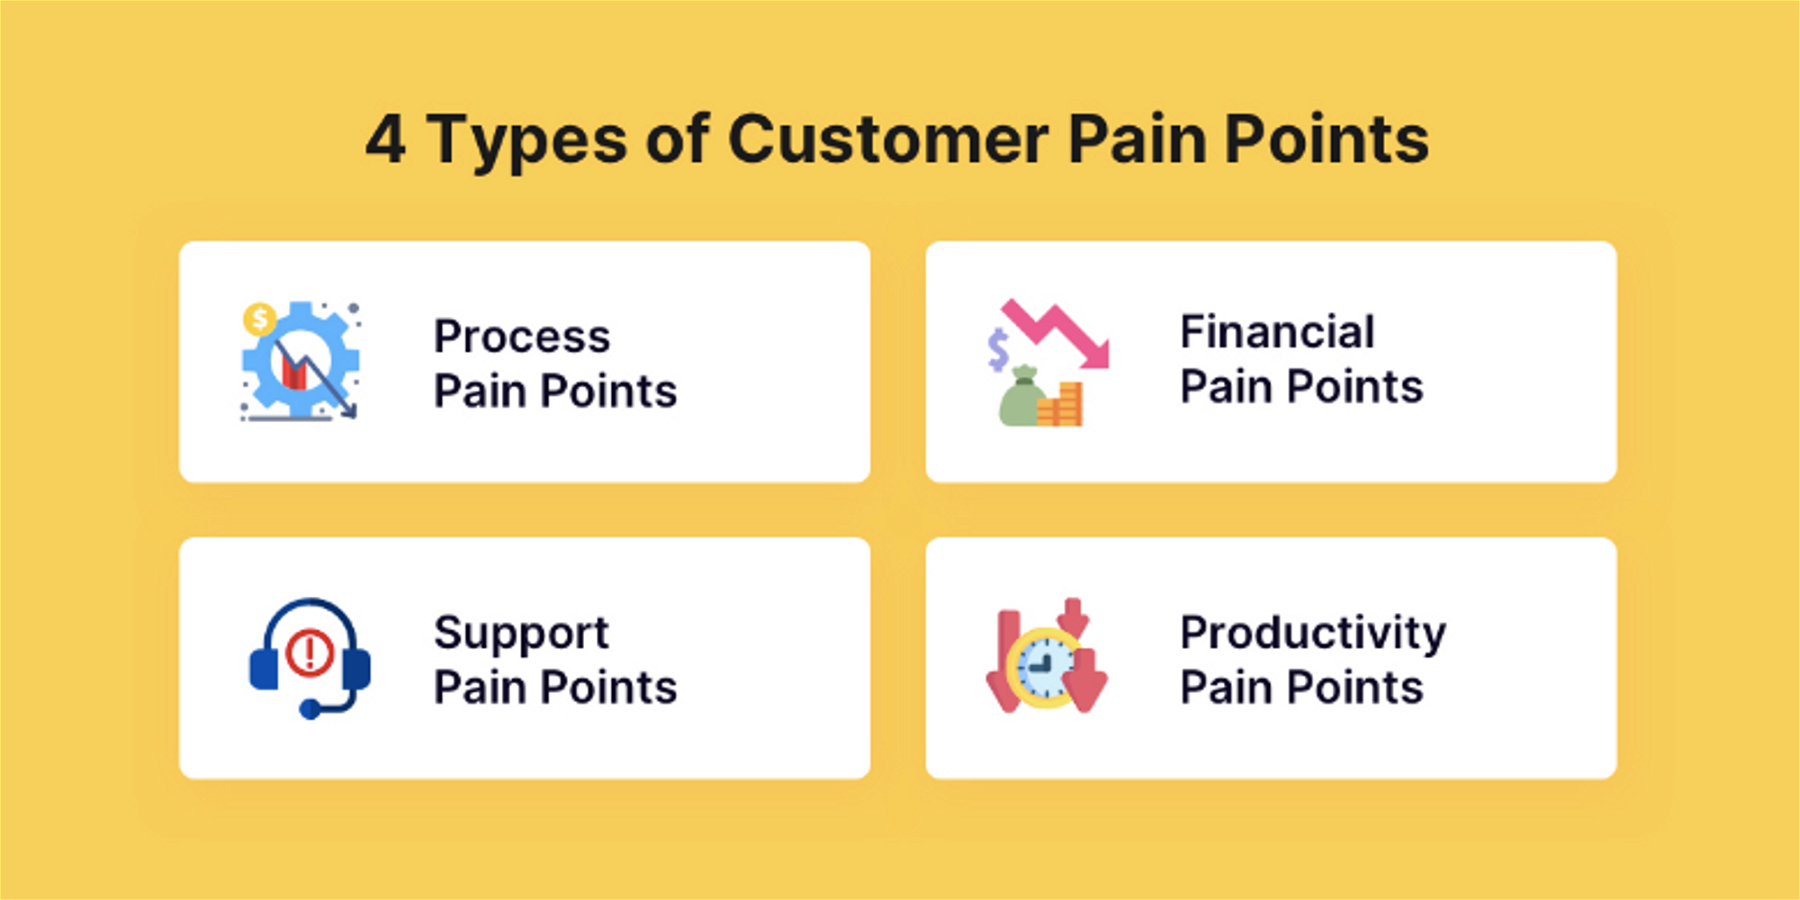 Source: https://www.revechat.com/blog/customer-pain-points/